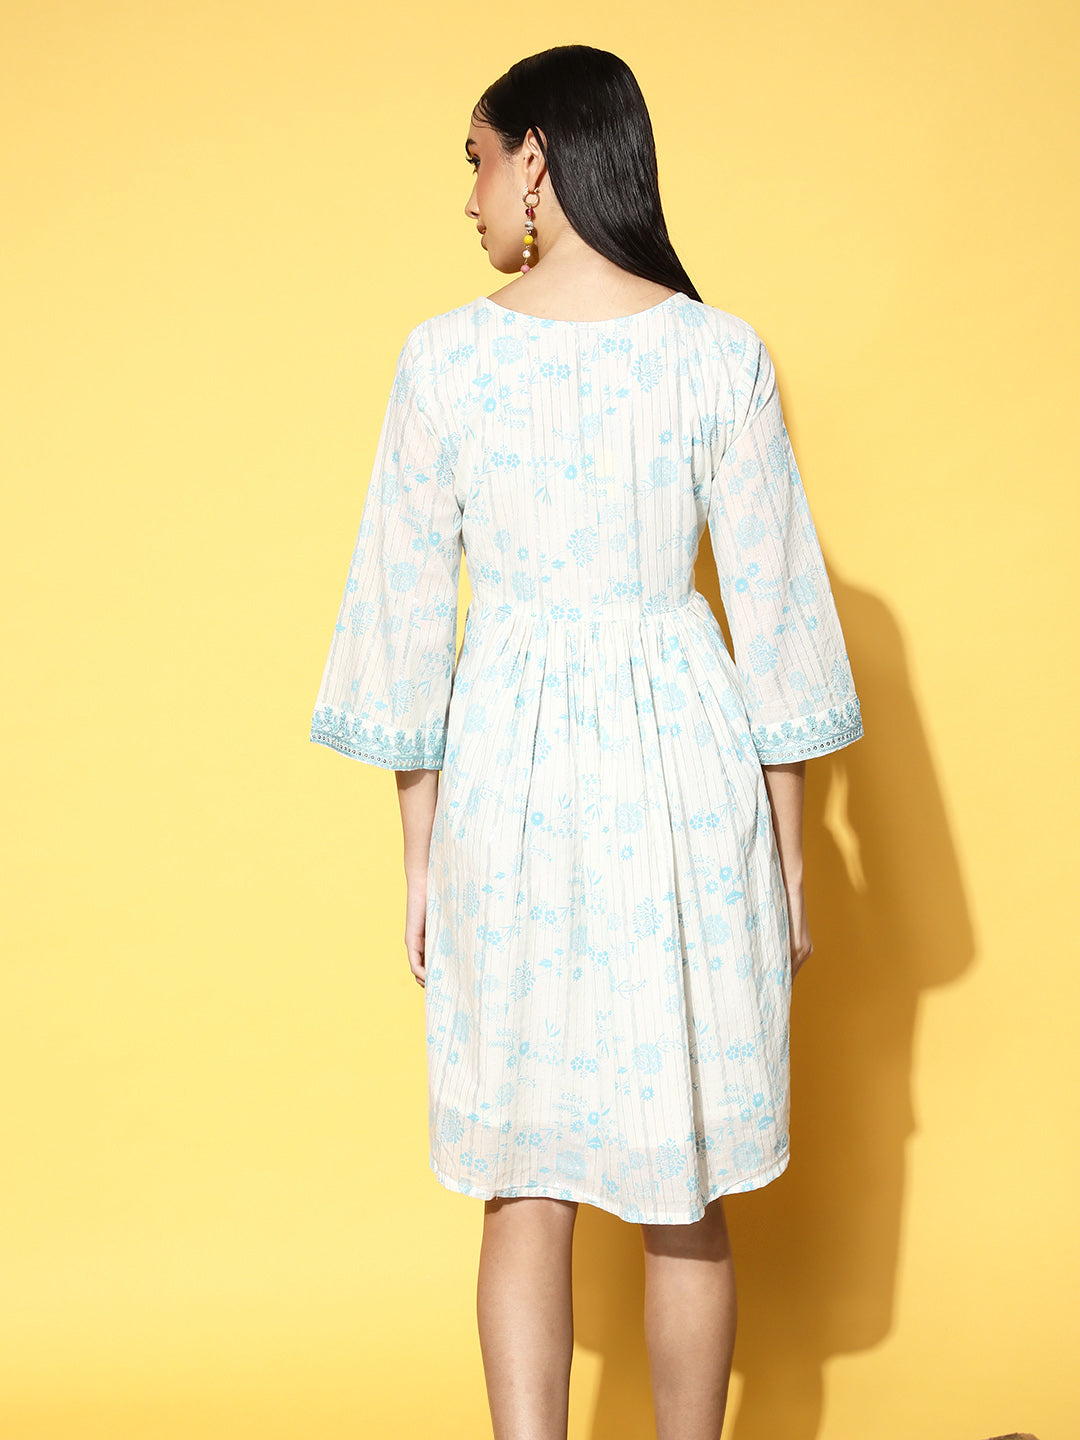 Ishin Women's White & Blue Embellished A-Line Dress